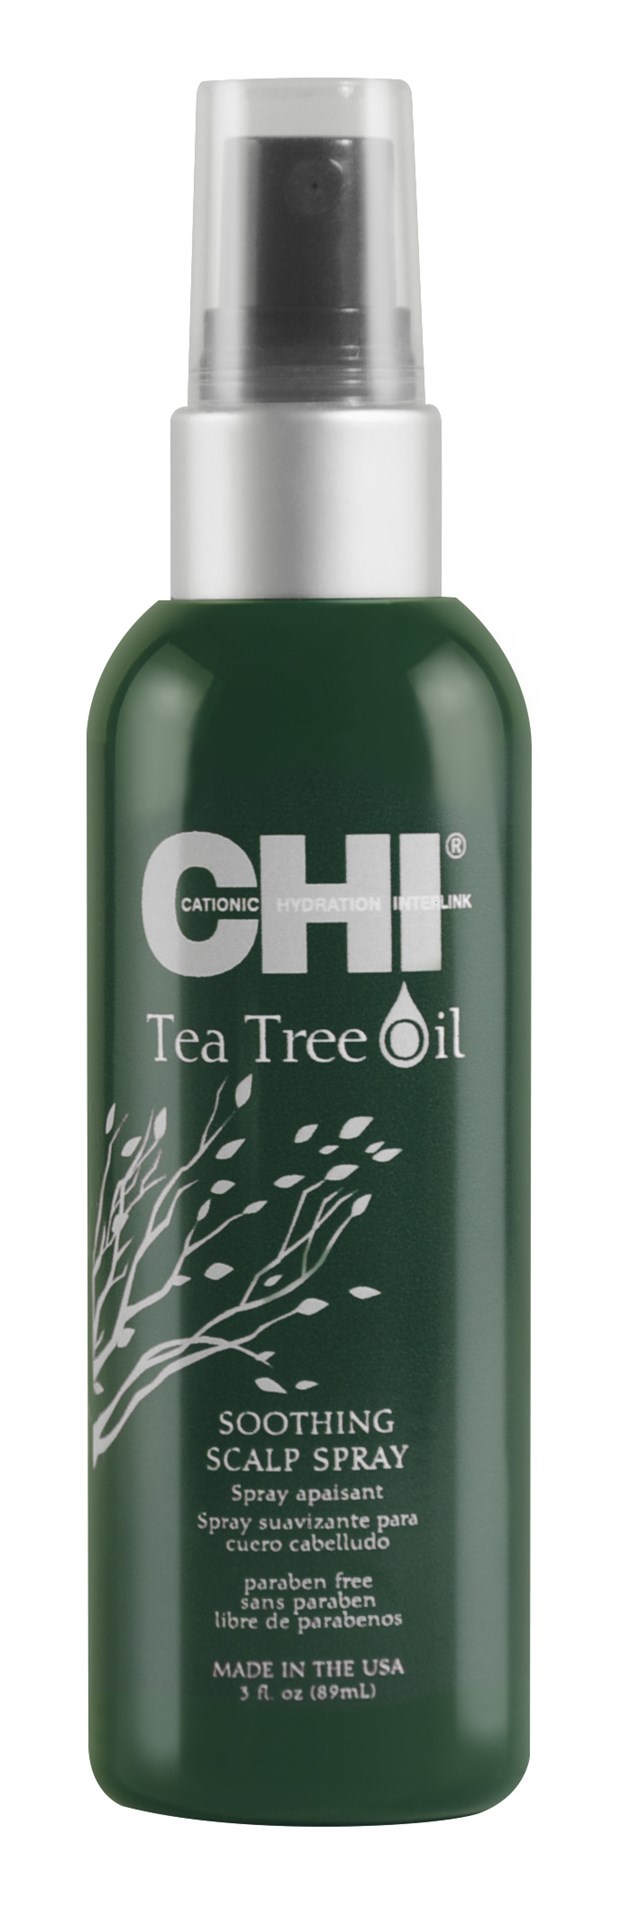 Tea Tree Oil Soothing Scalp Spray